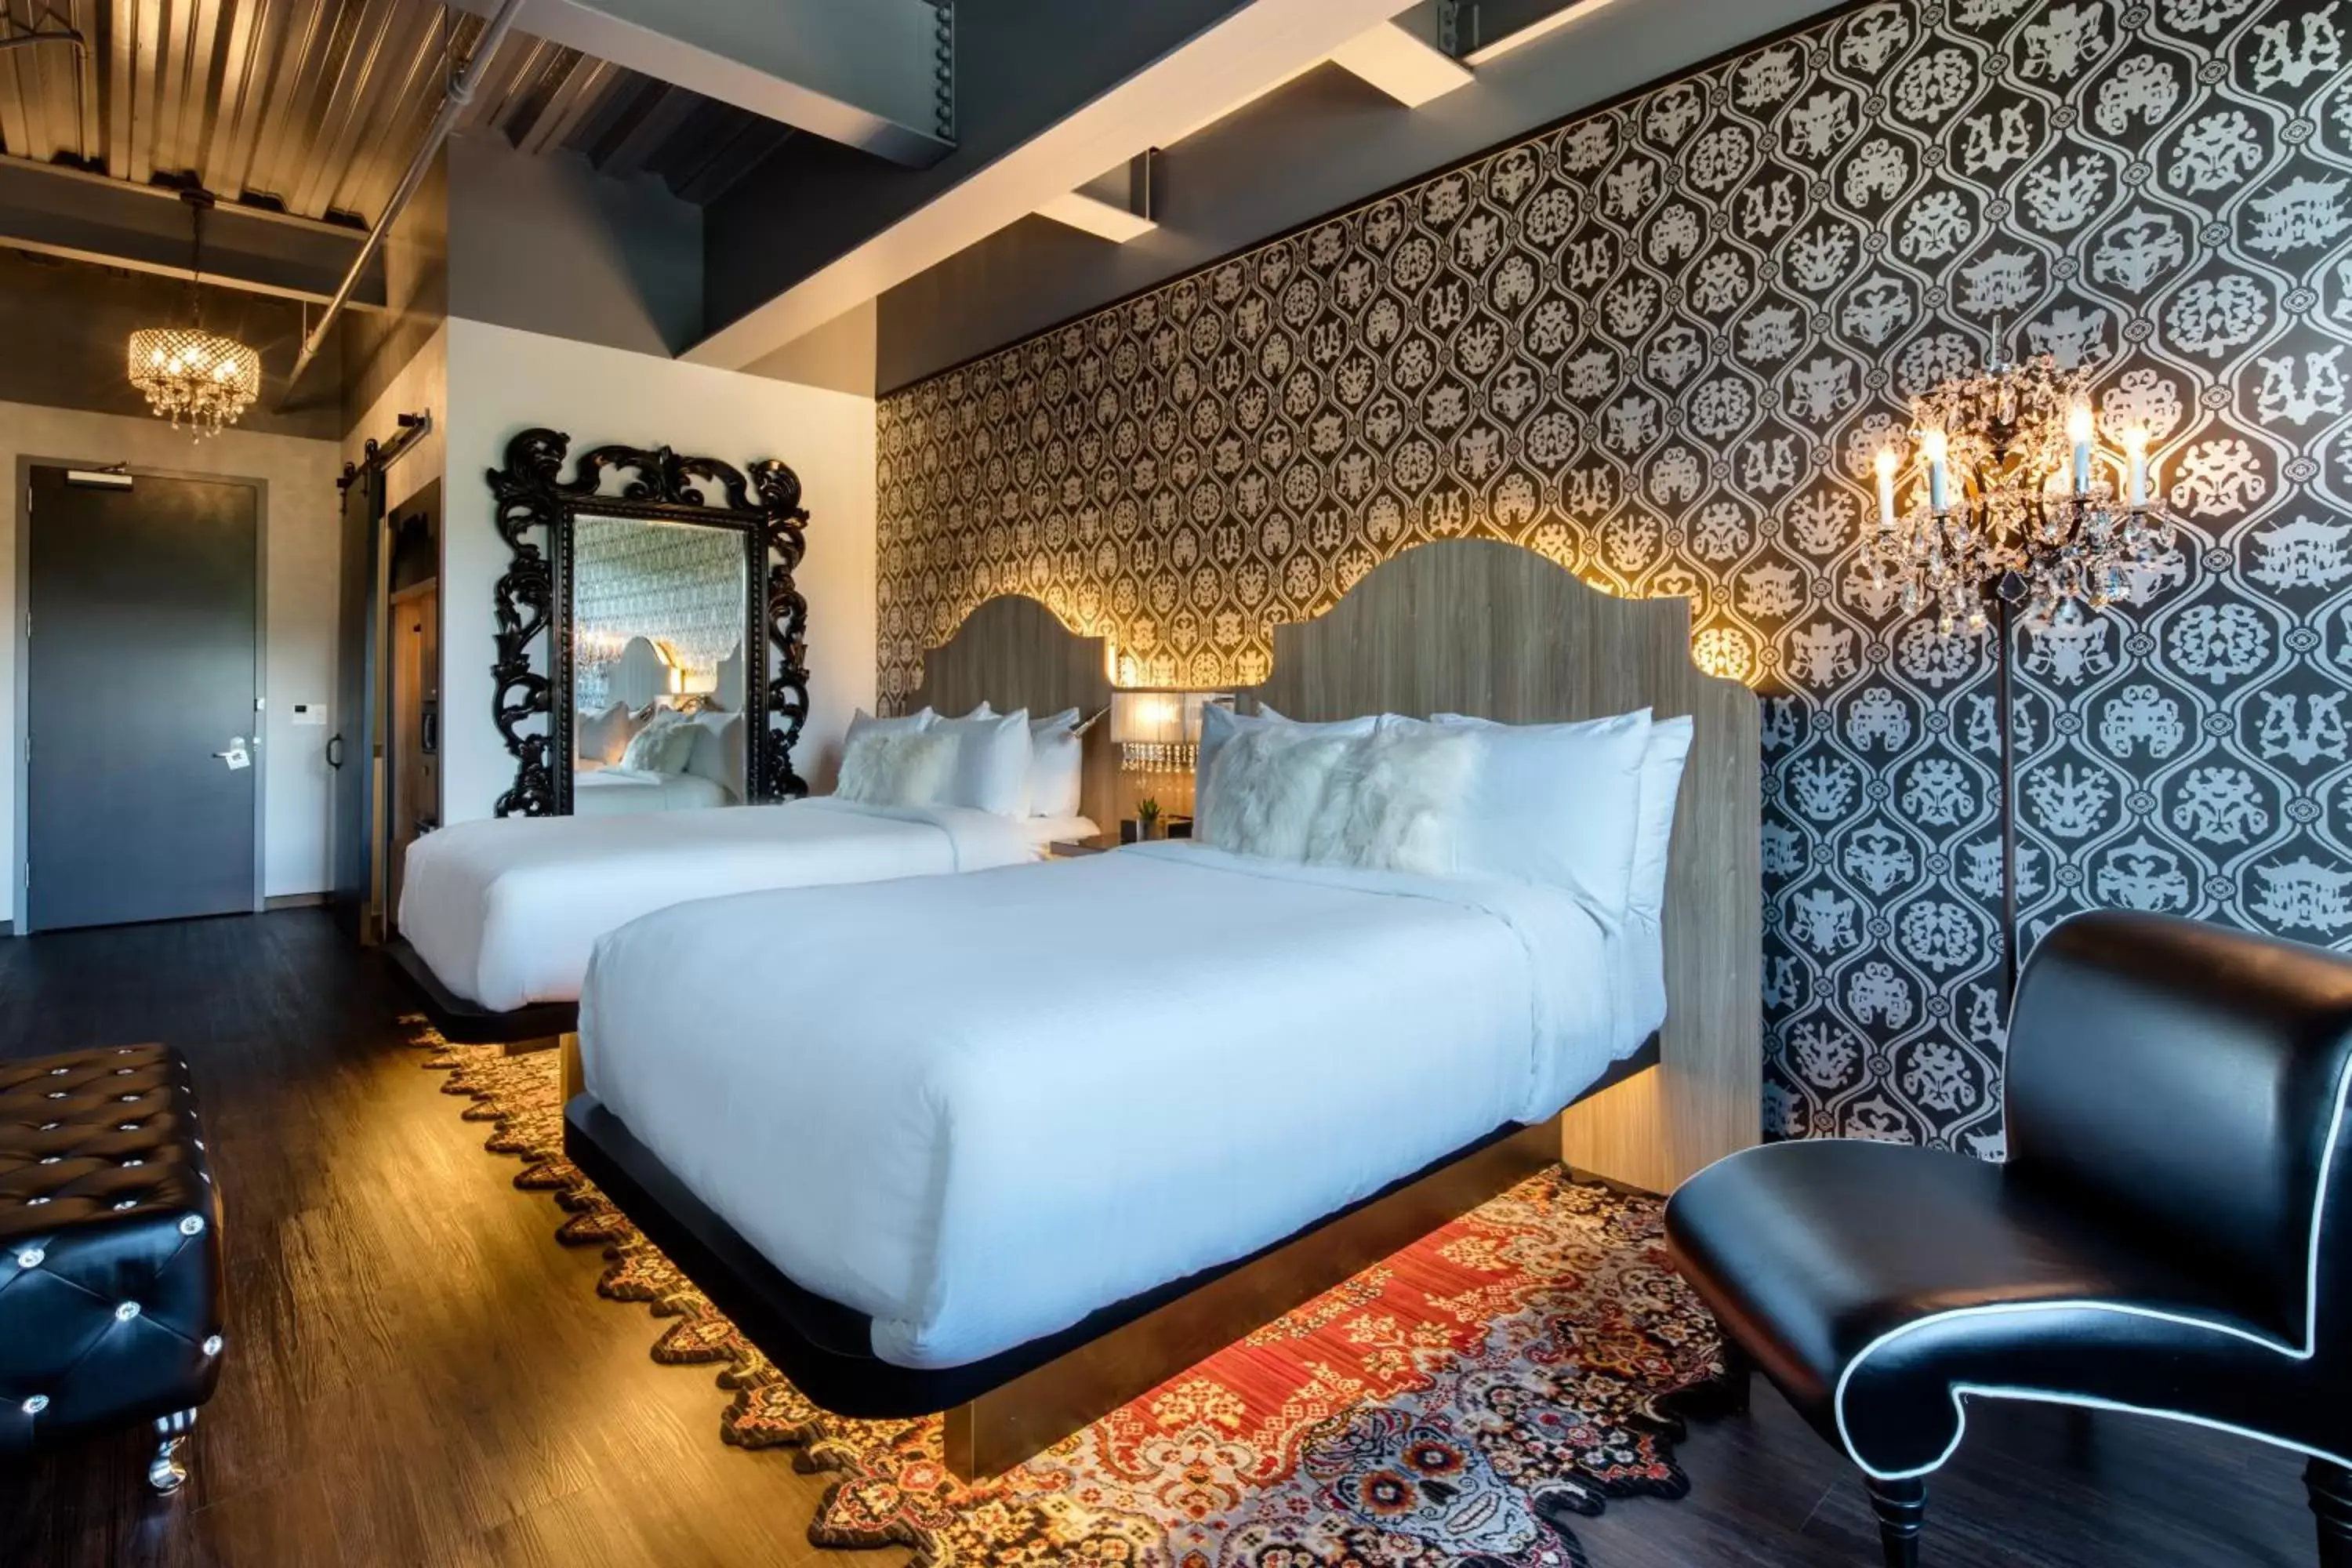 Bed, Room Photo in Hotel Nyack, a JdV by Hyatt Hotel